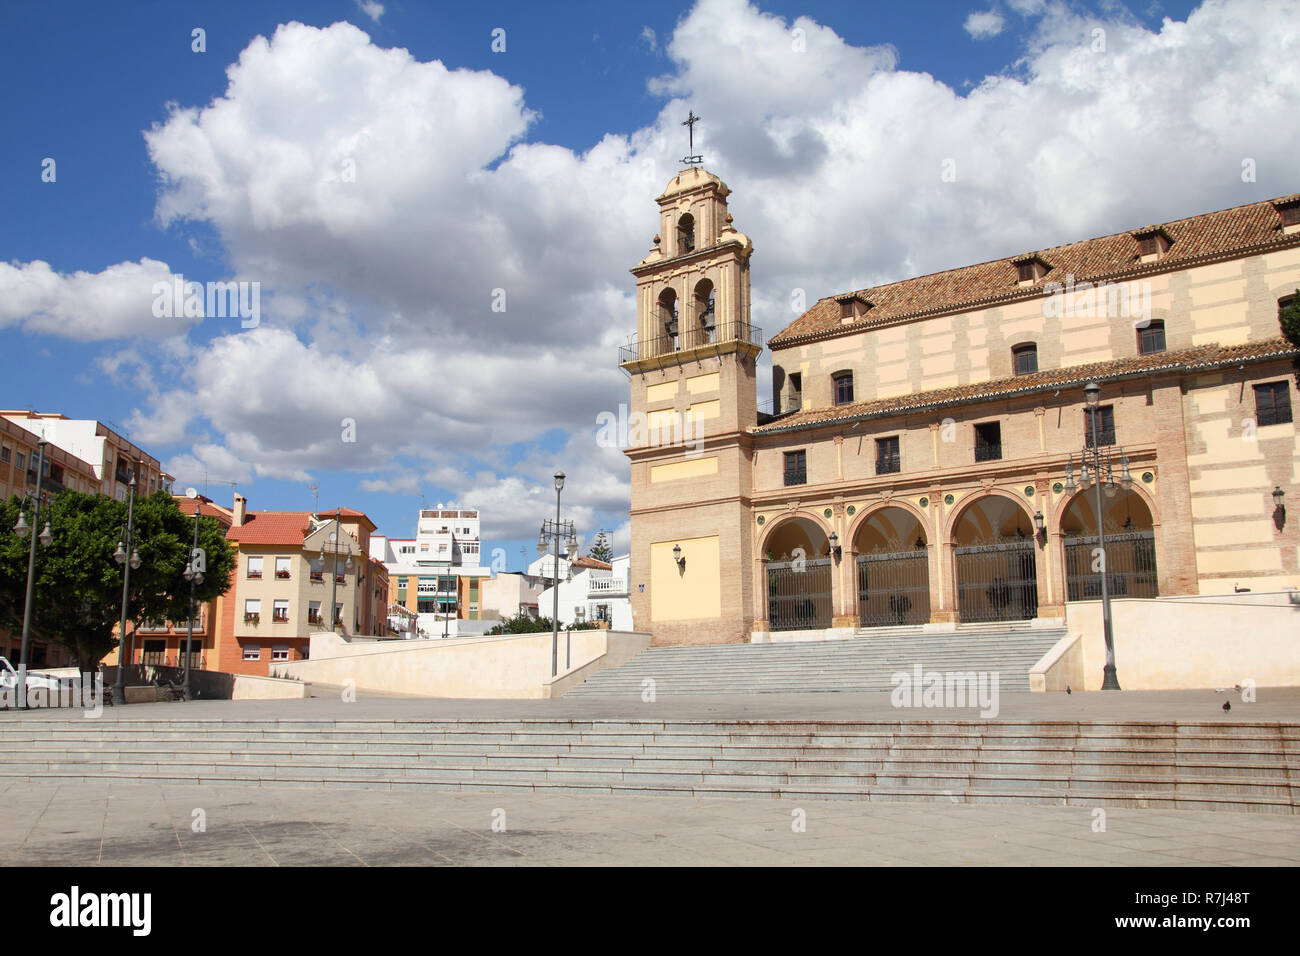 Malaga in Andalusia, Spain. Santuario square - old religious landmark. Stock Photo